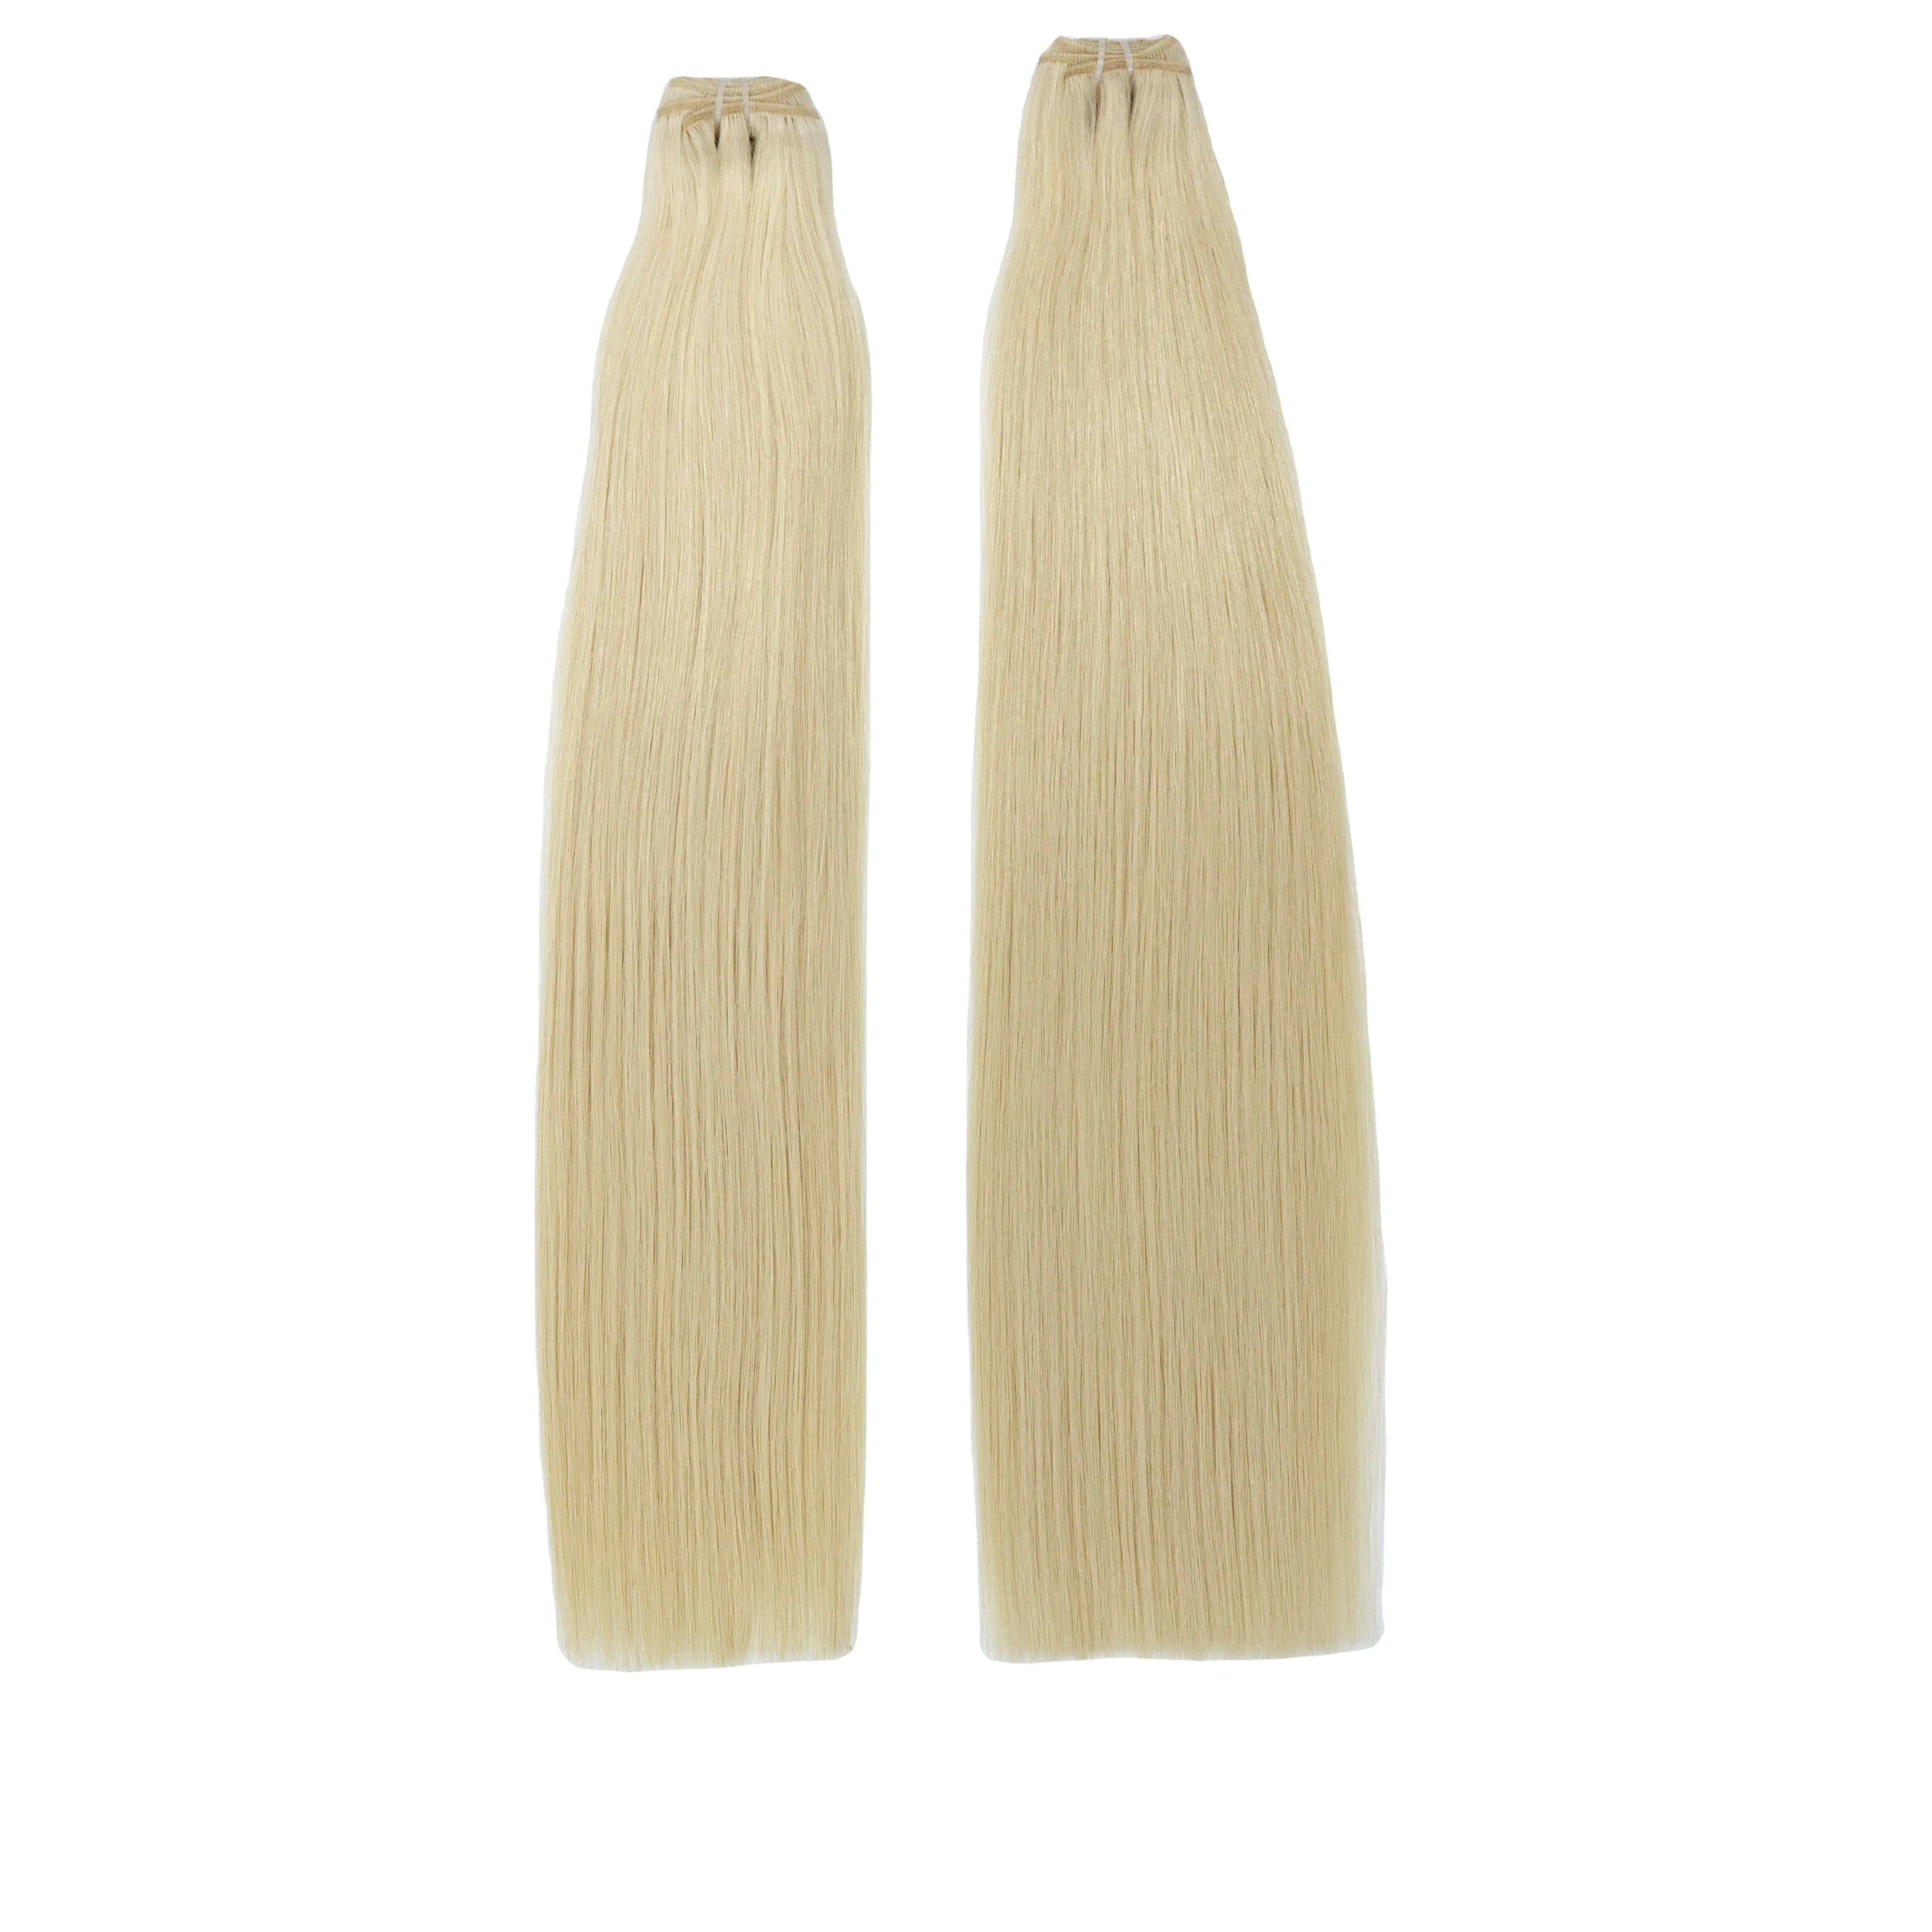 Straight raw virgin hair human hair extensions weave bundles in bulk price cuticle intact